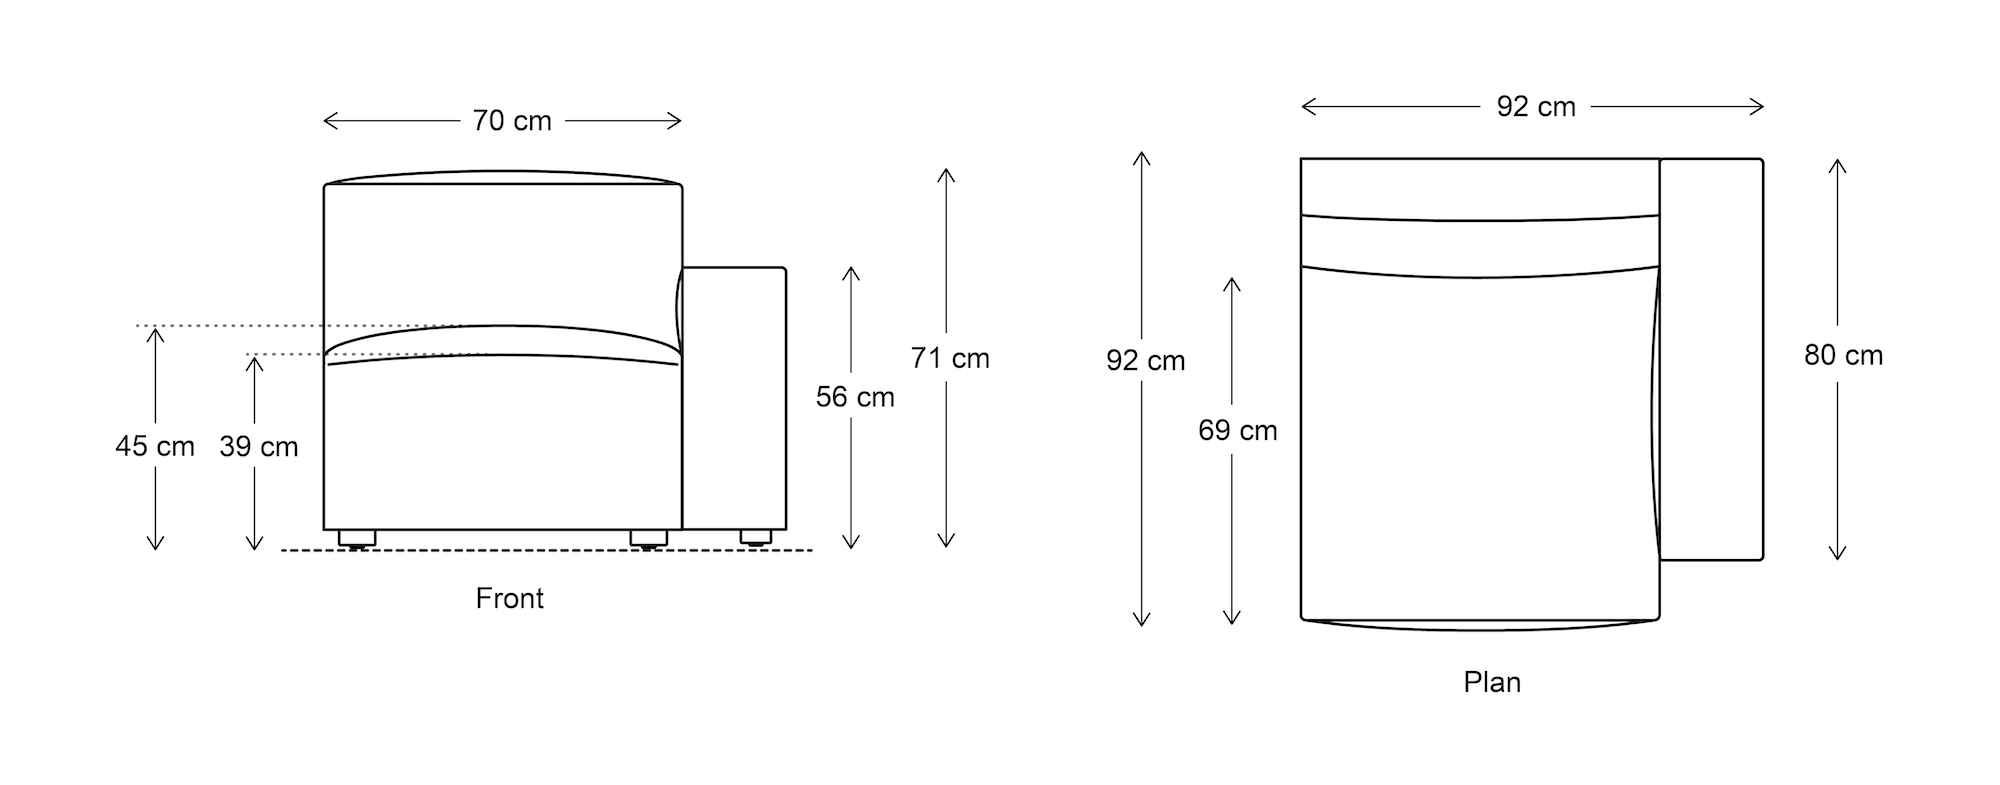 Modular right seat module sofa dimensions